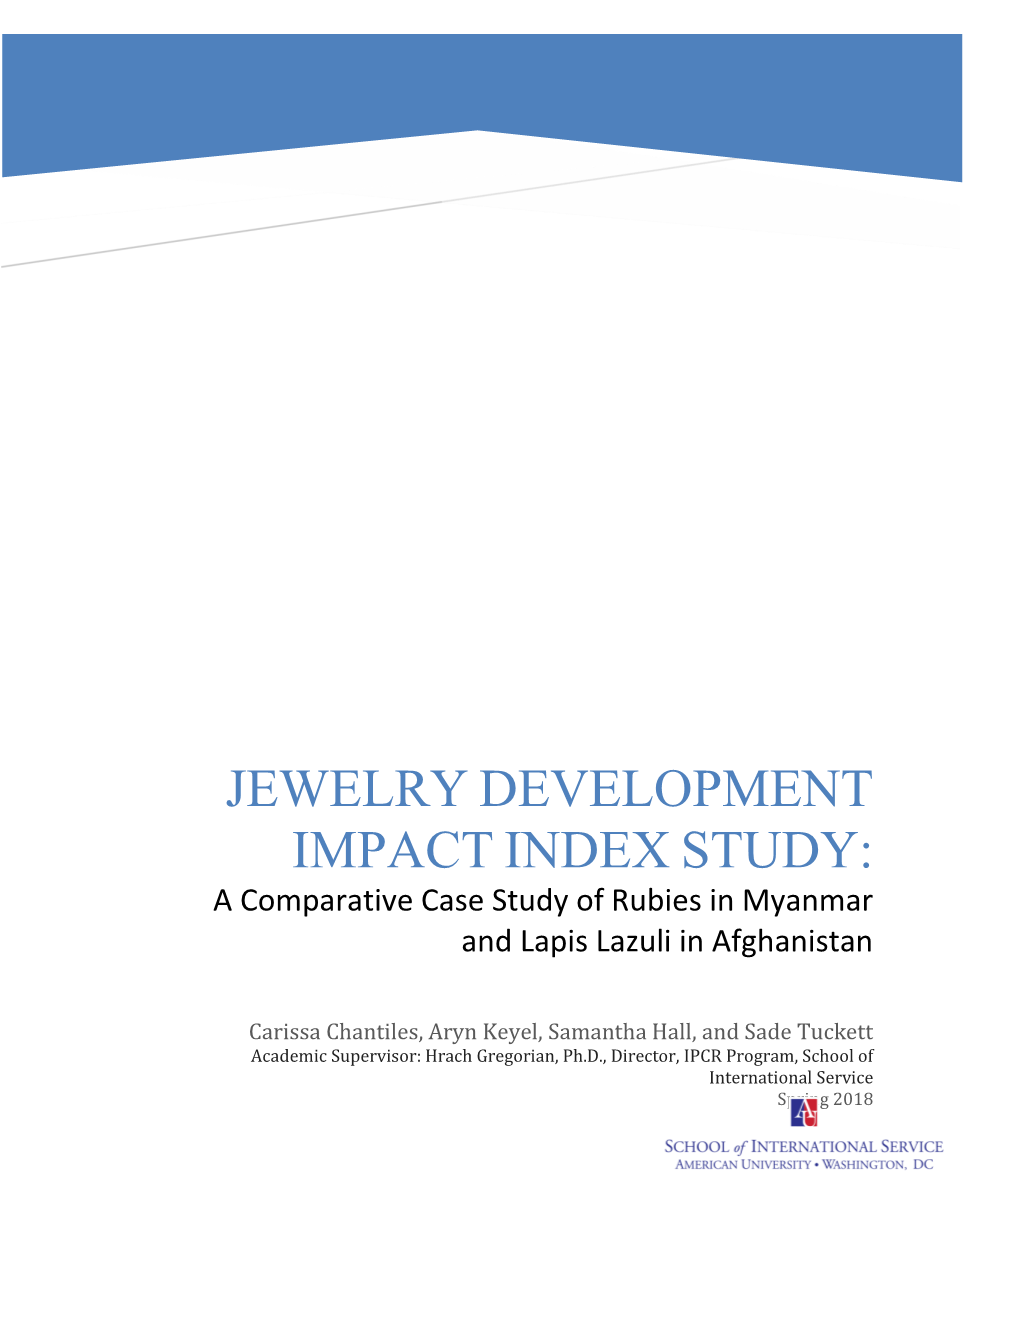 Jewelry Development Impact Index Study